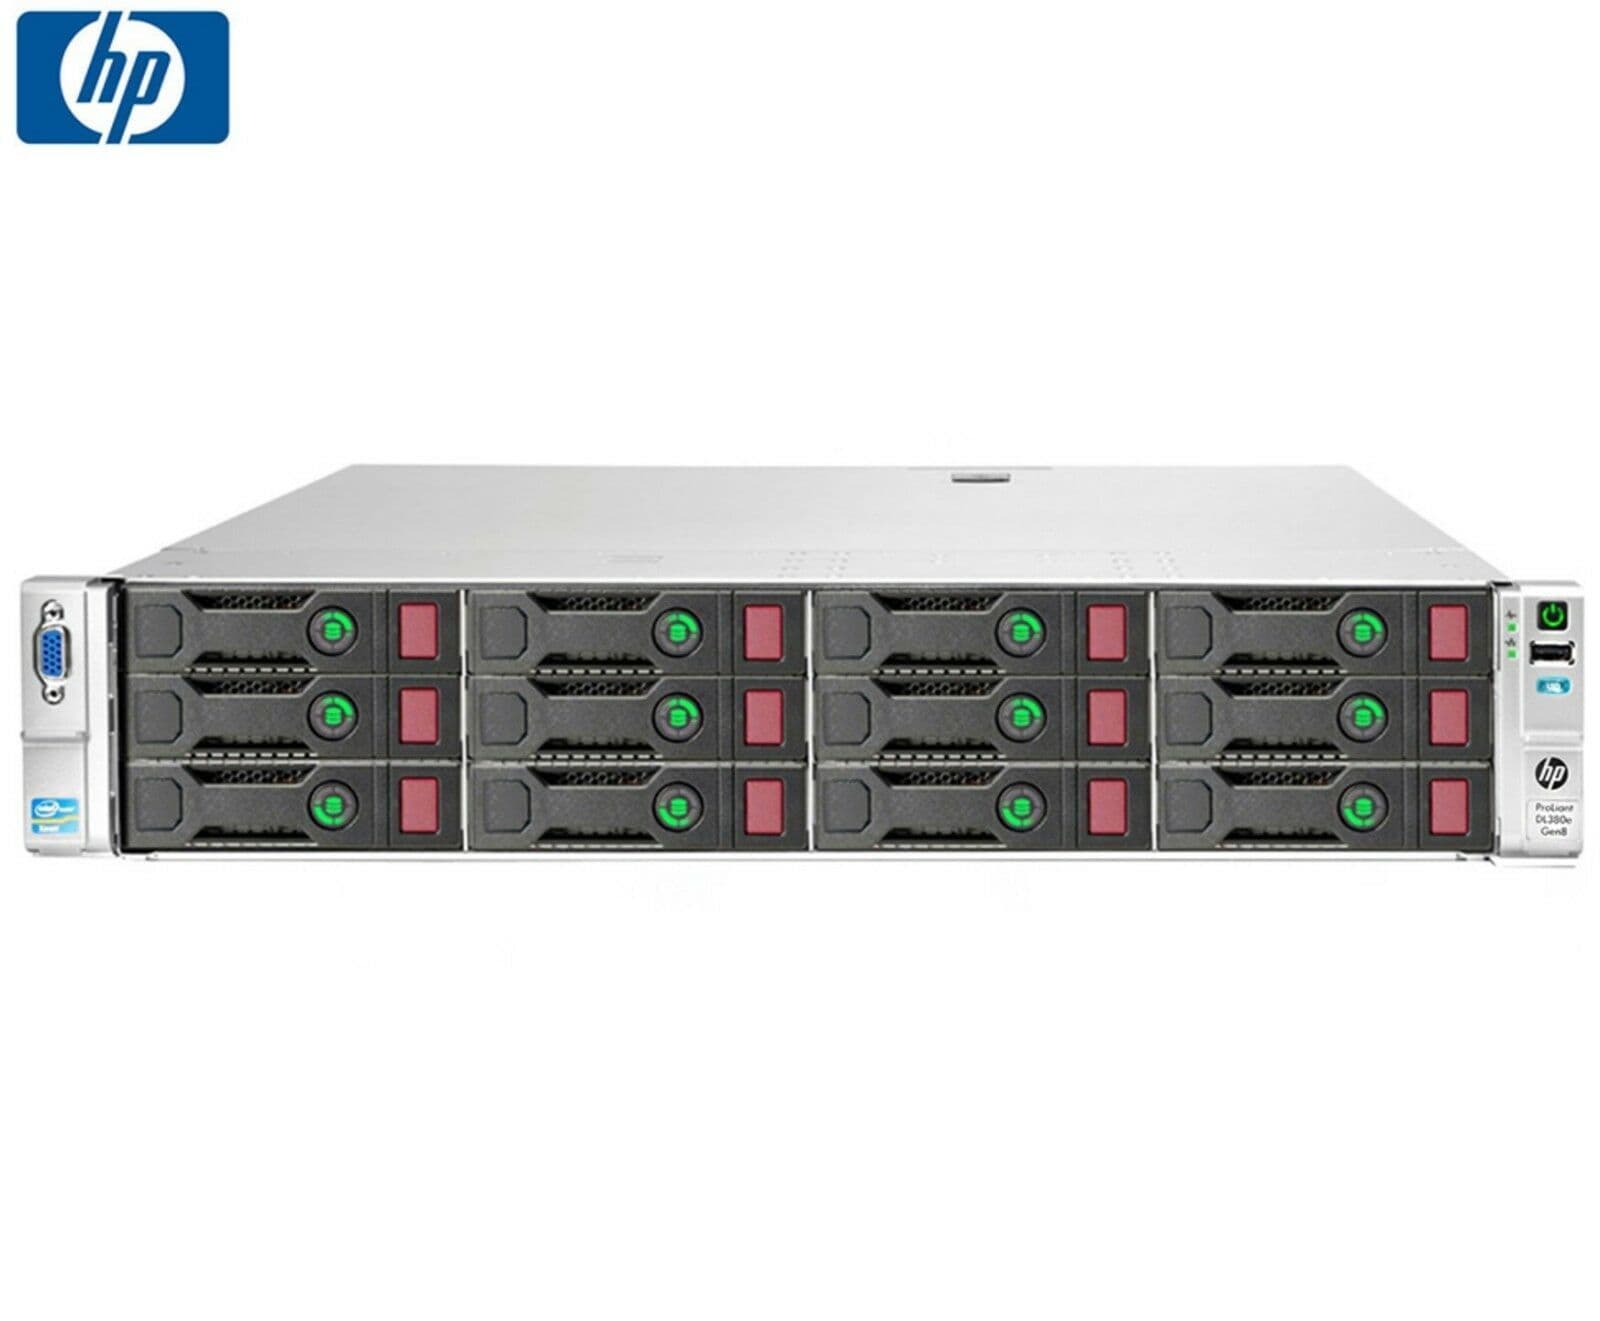 vlevo nahoře logo společnosti HP, na obrázku 12 diskový server velikosti 2U s podporou až 14x 3,5" pevných disků